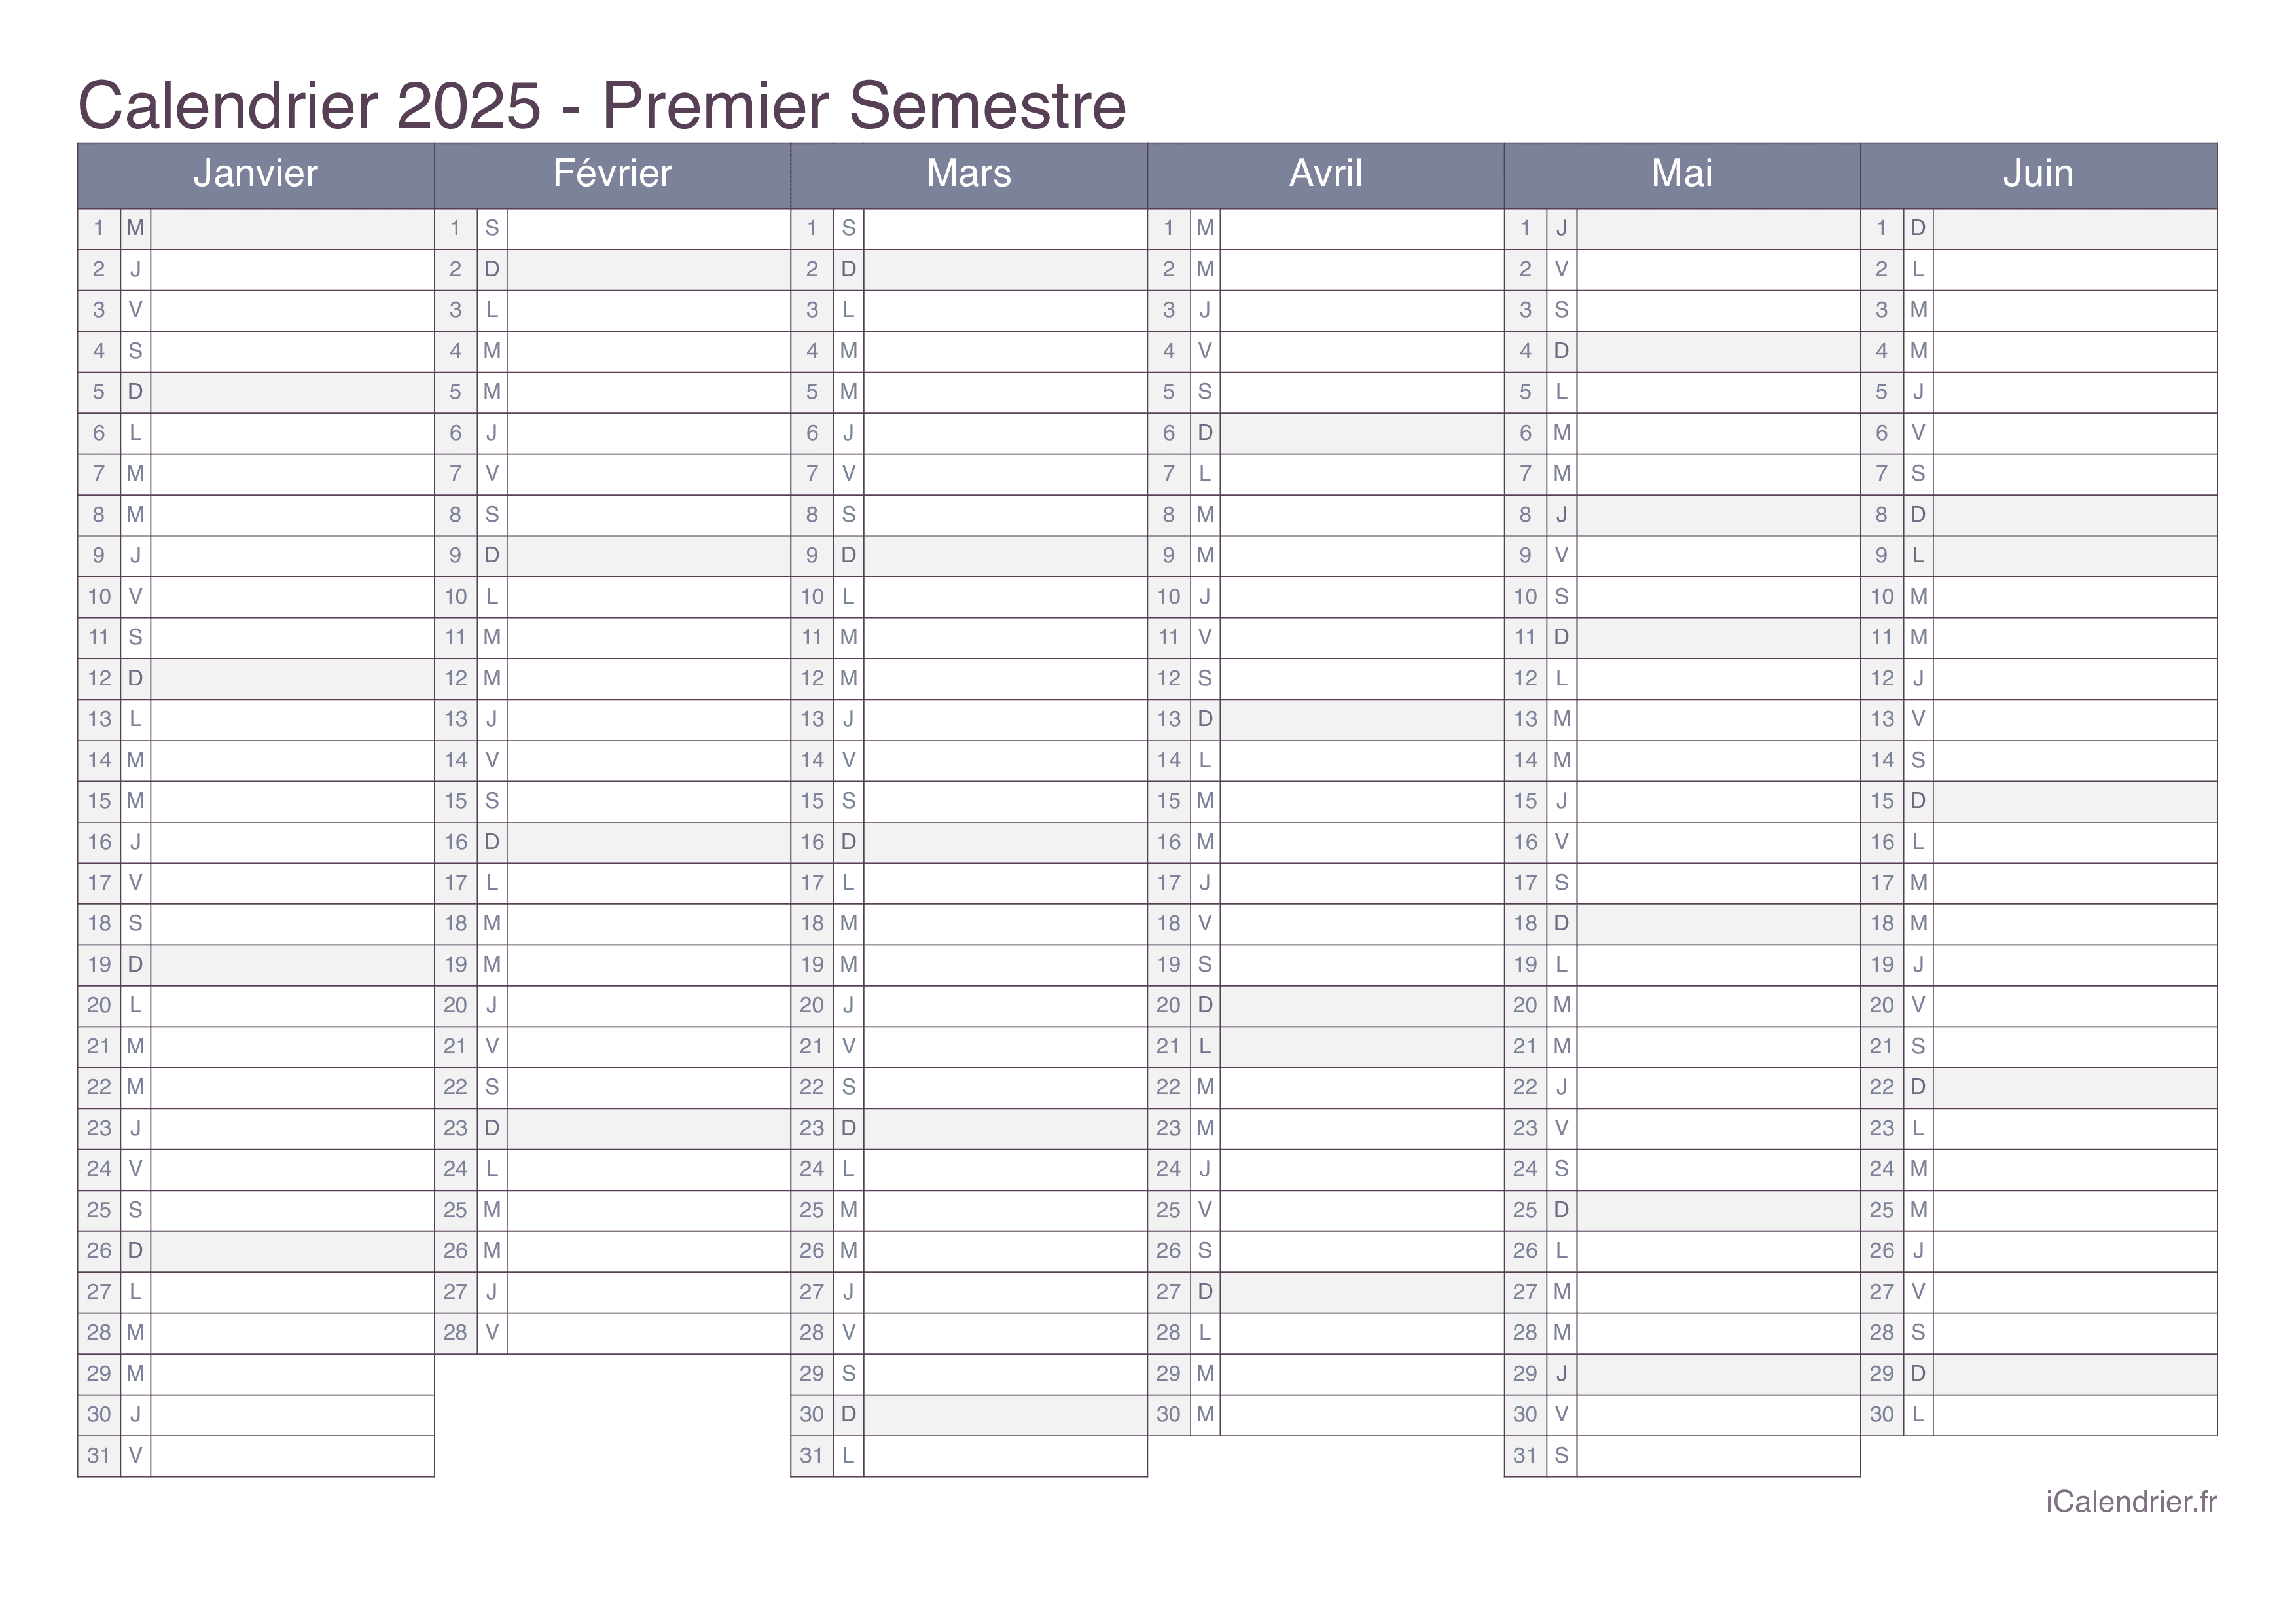 Calendrier par semestre 2025 - Office